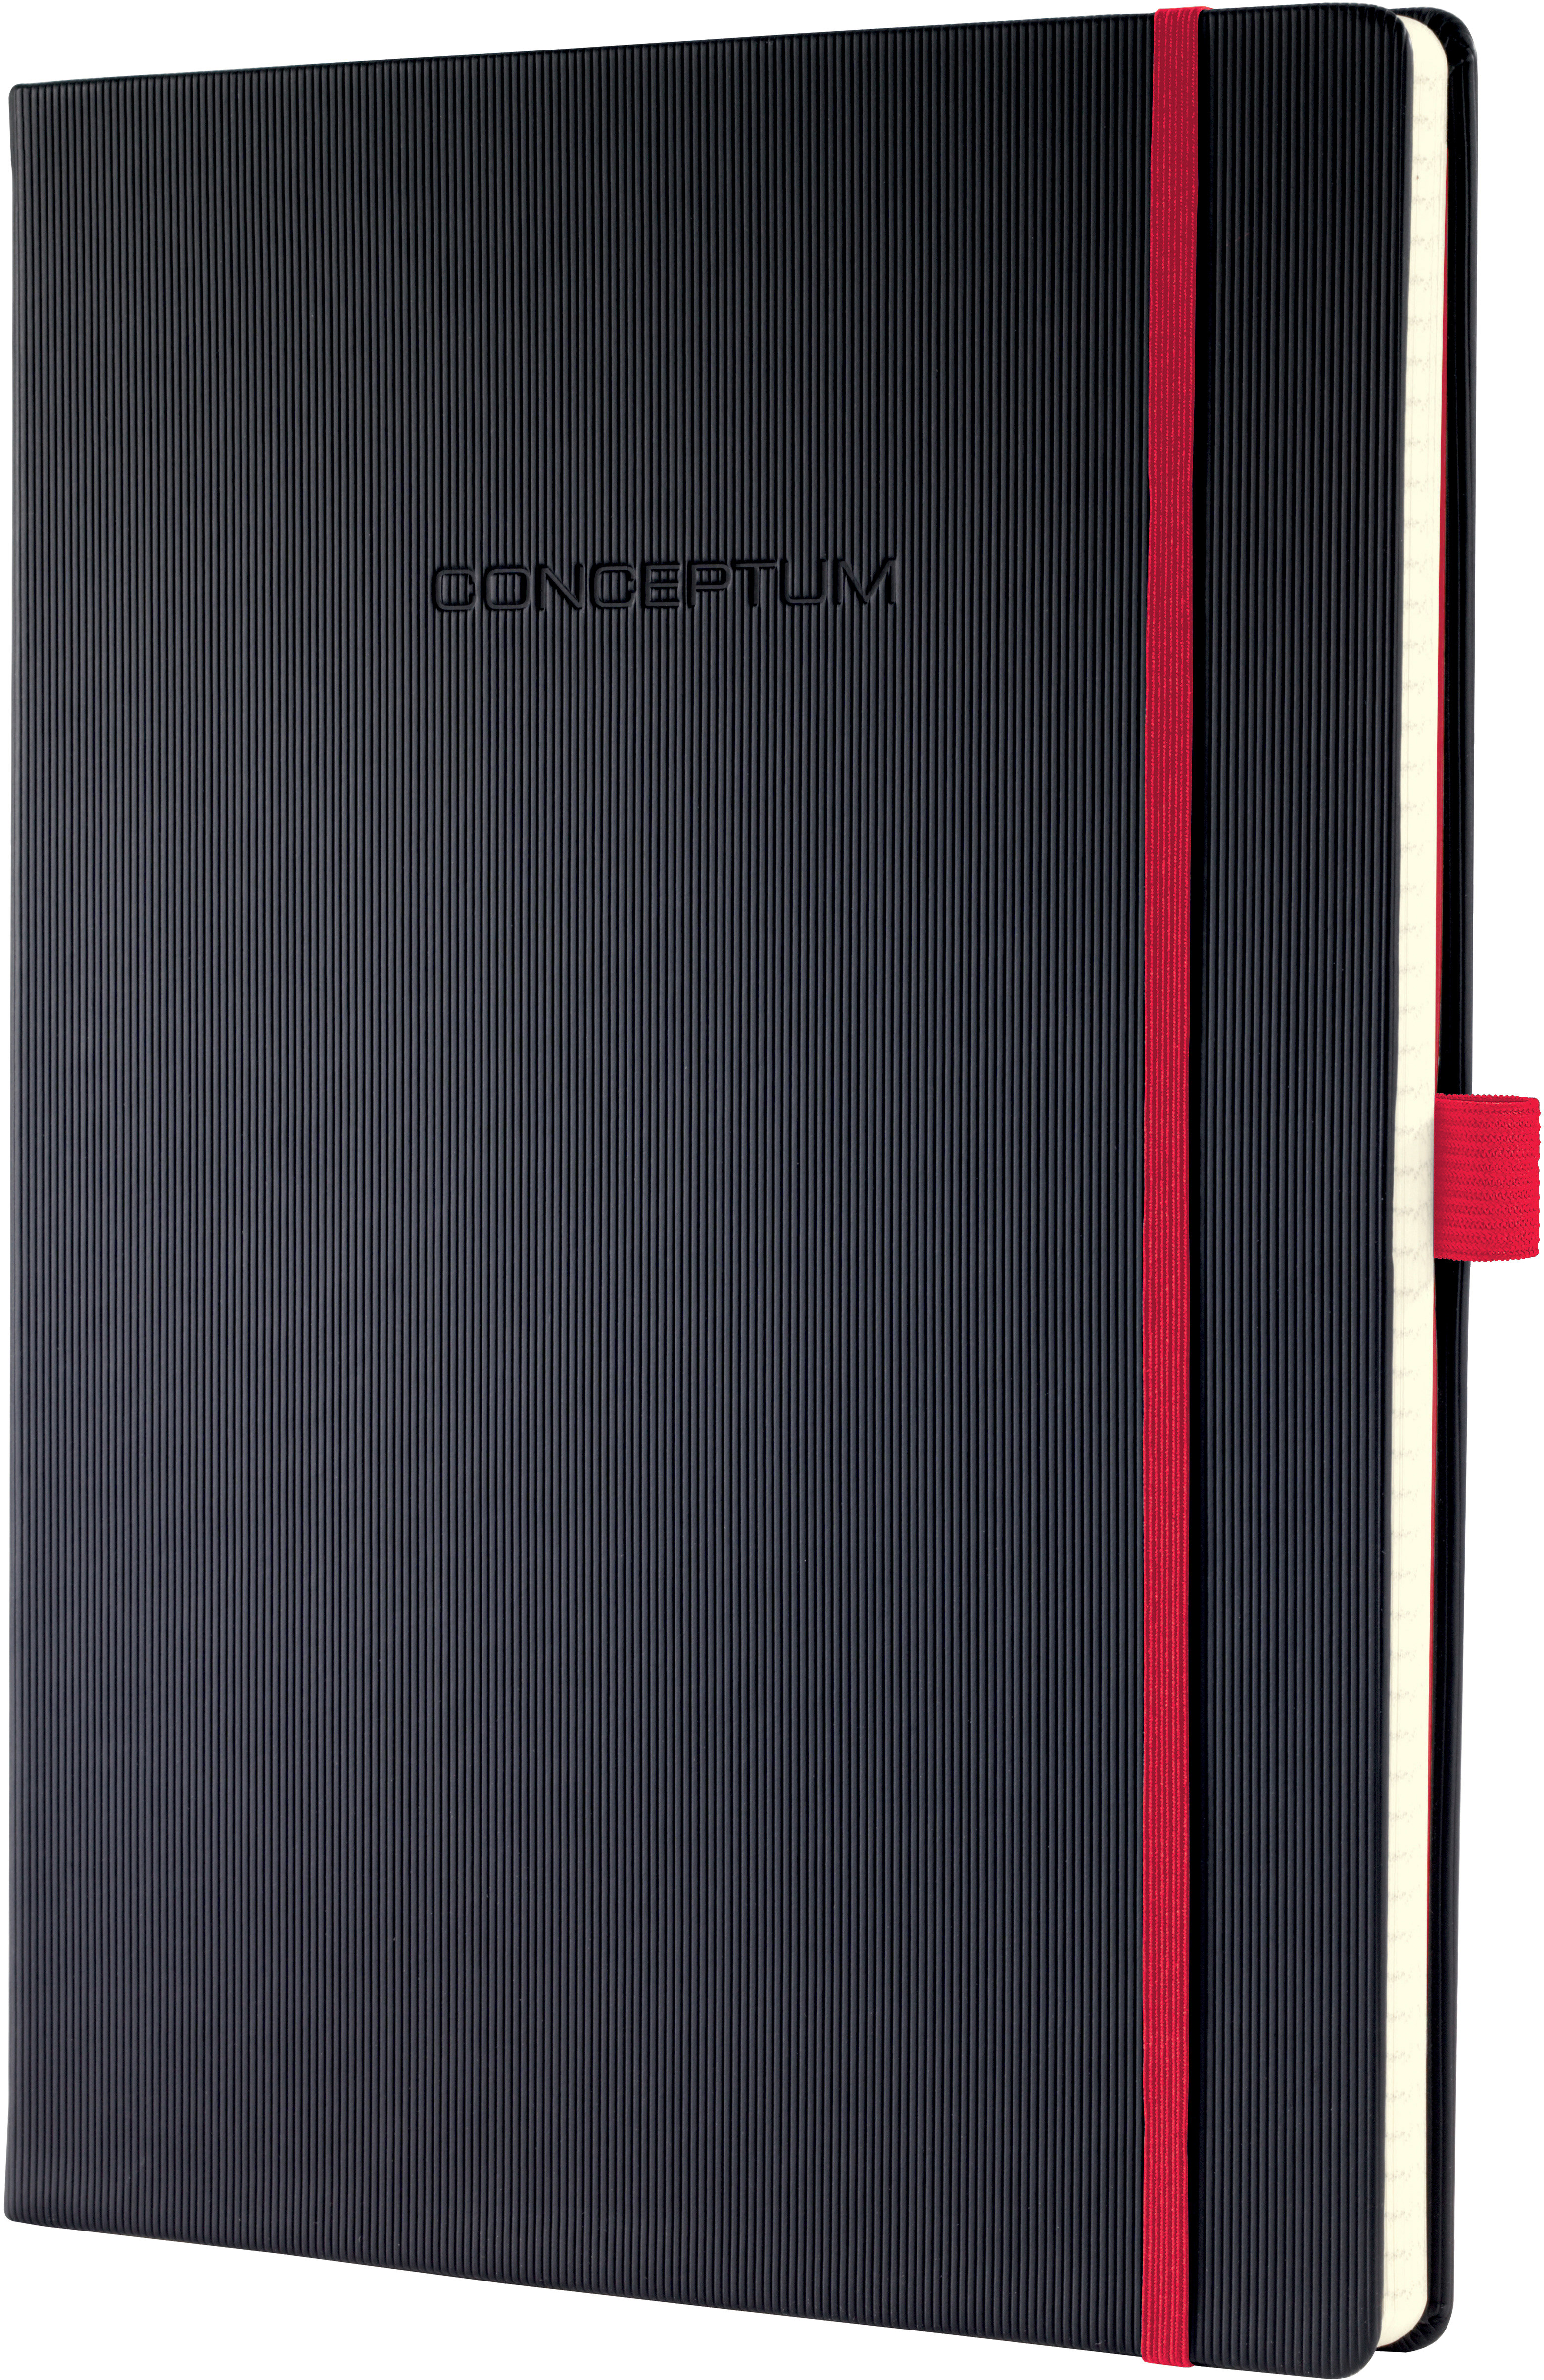 CONCEPTUM Red Edition, quadr. CO660 194S,80g,213x295x20mm